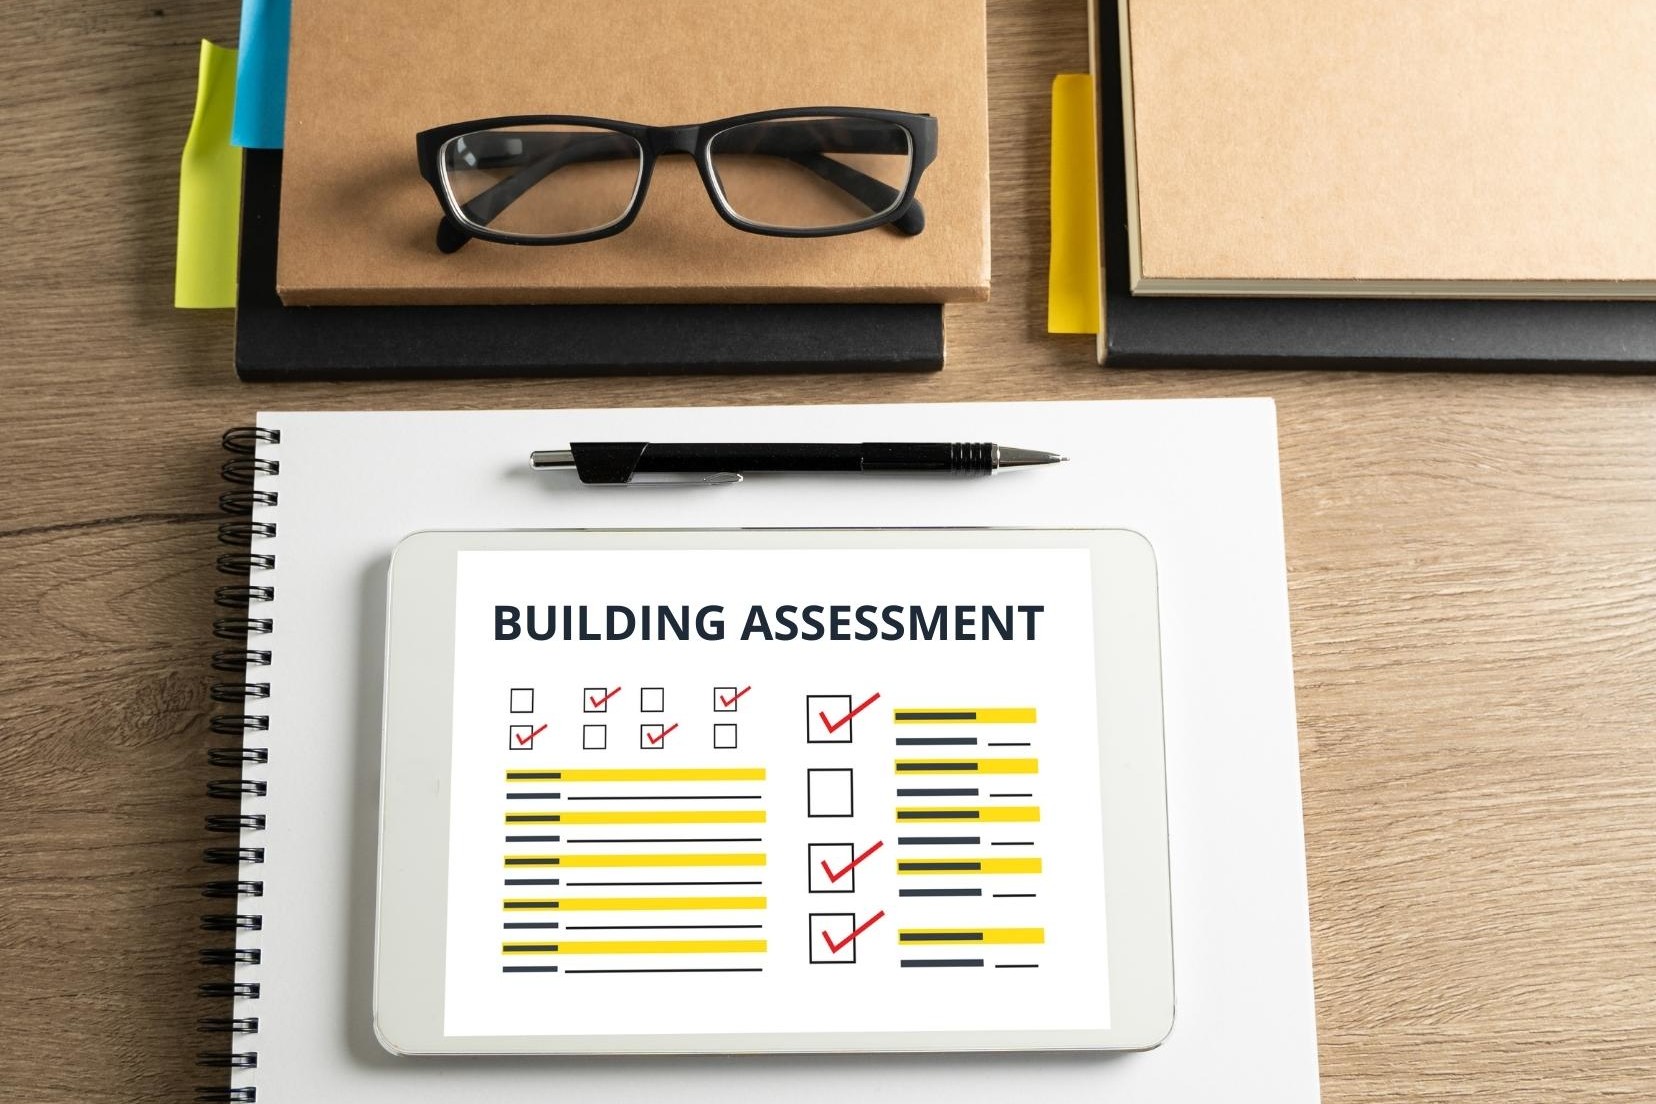 Smart building assessment